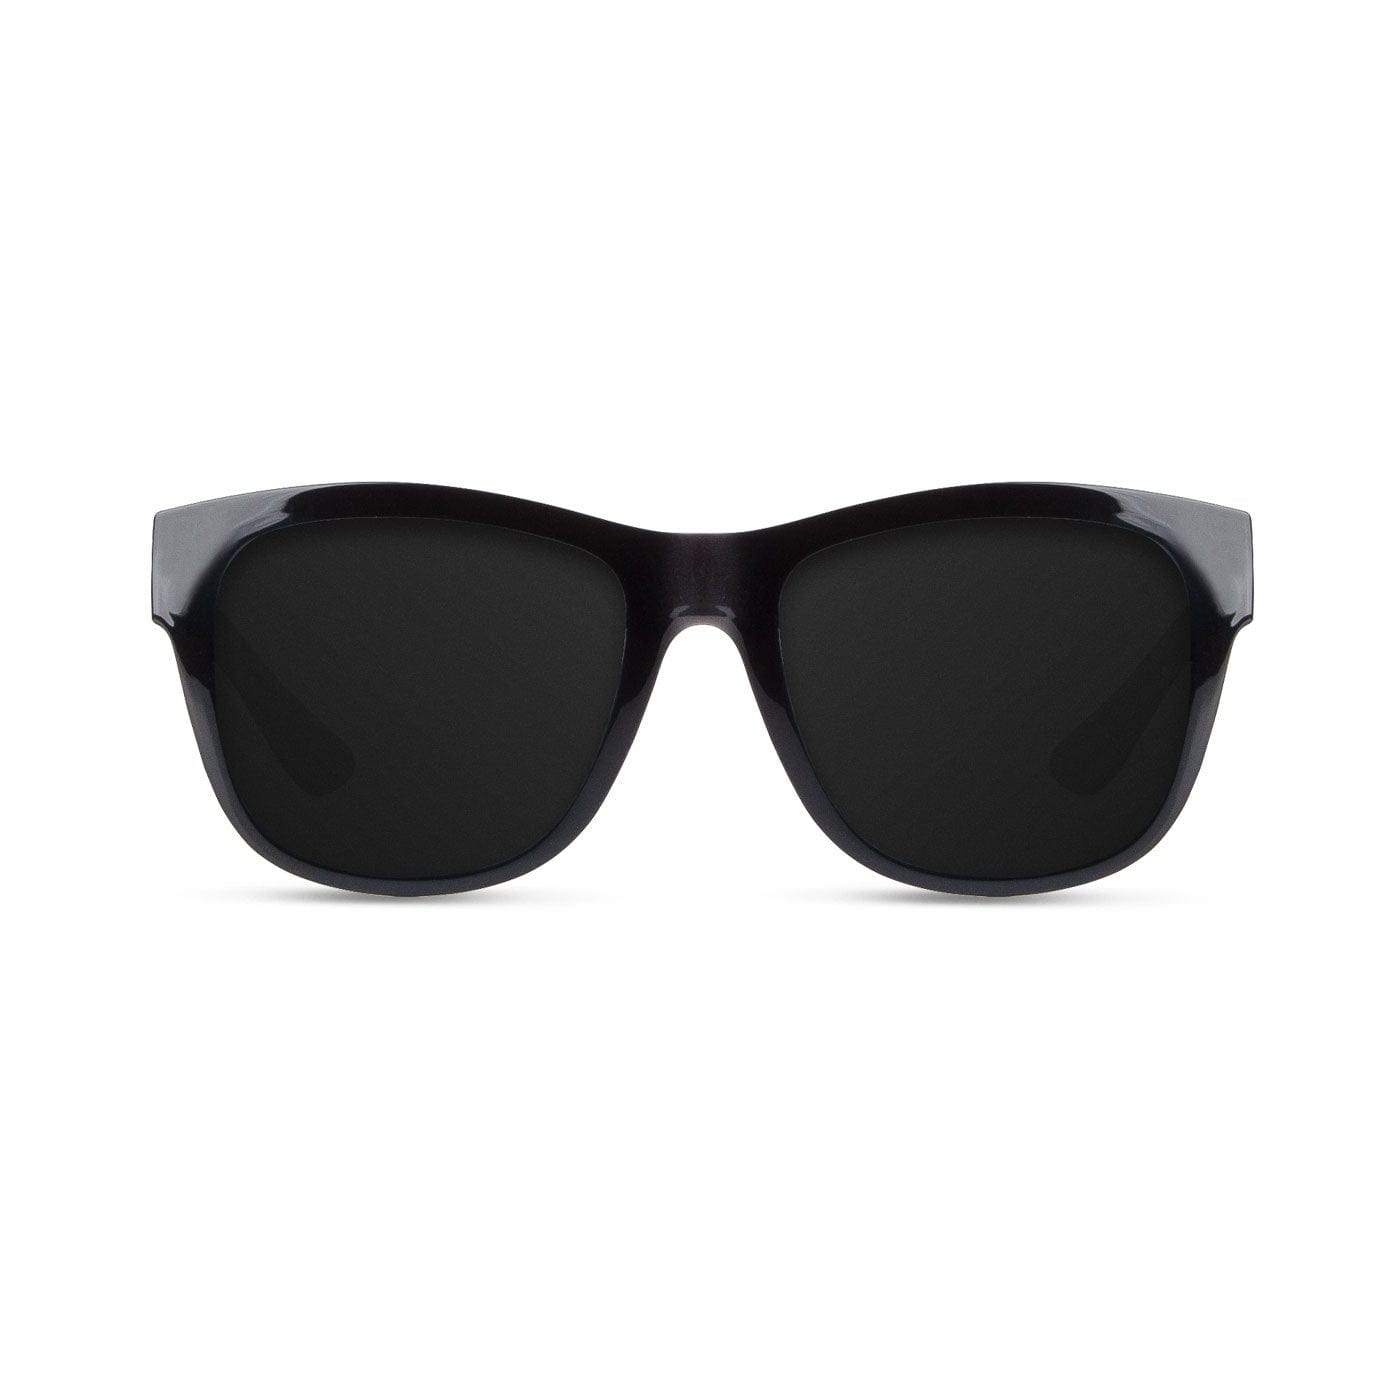 Makai Shinny Black / Black Sunglasses